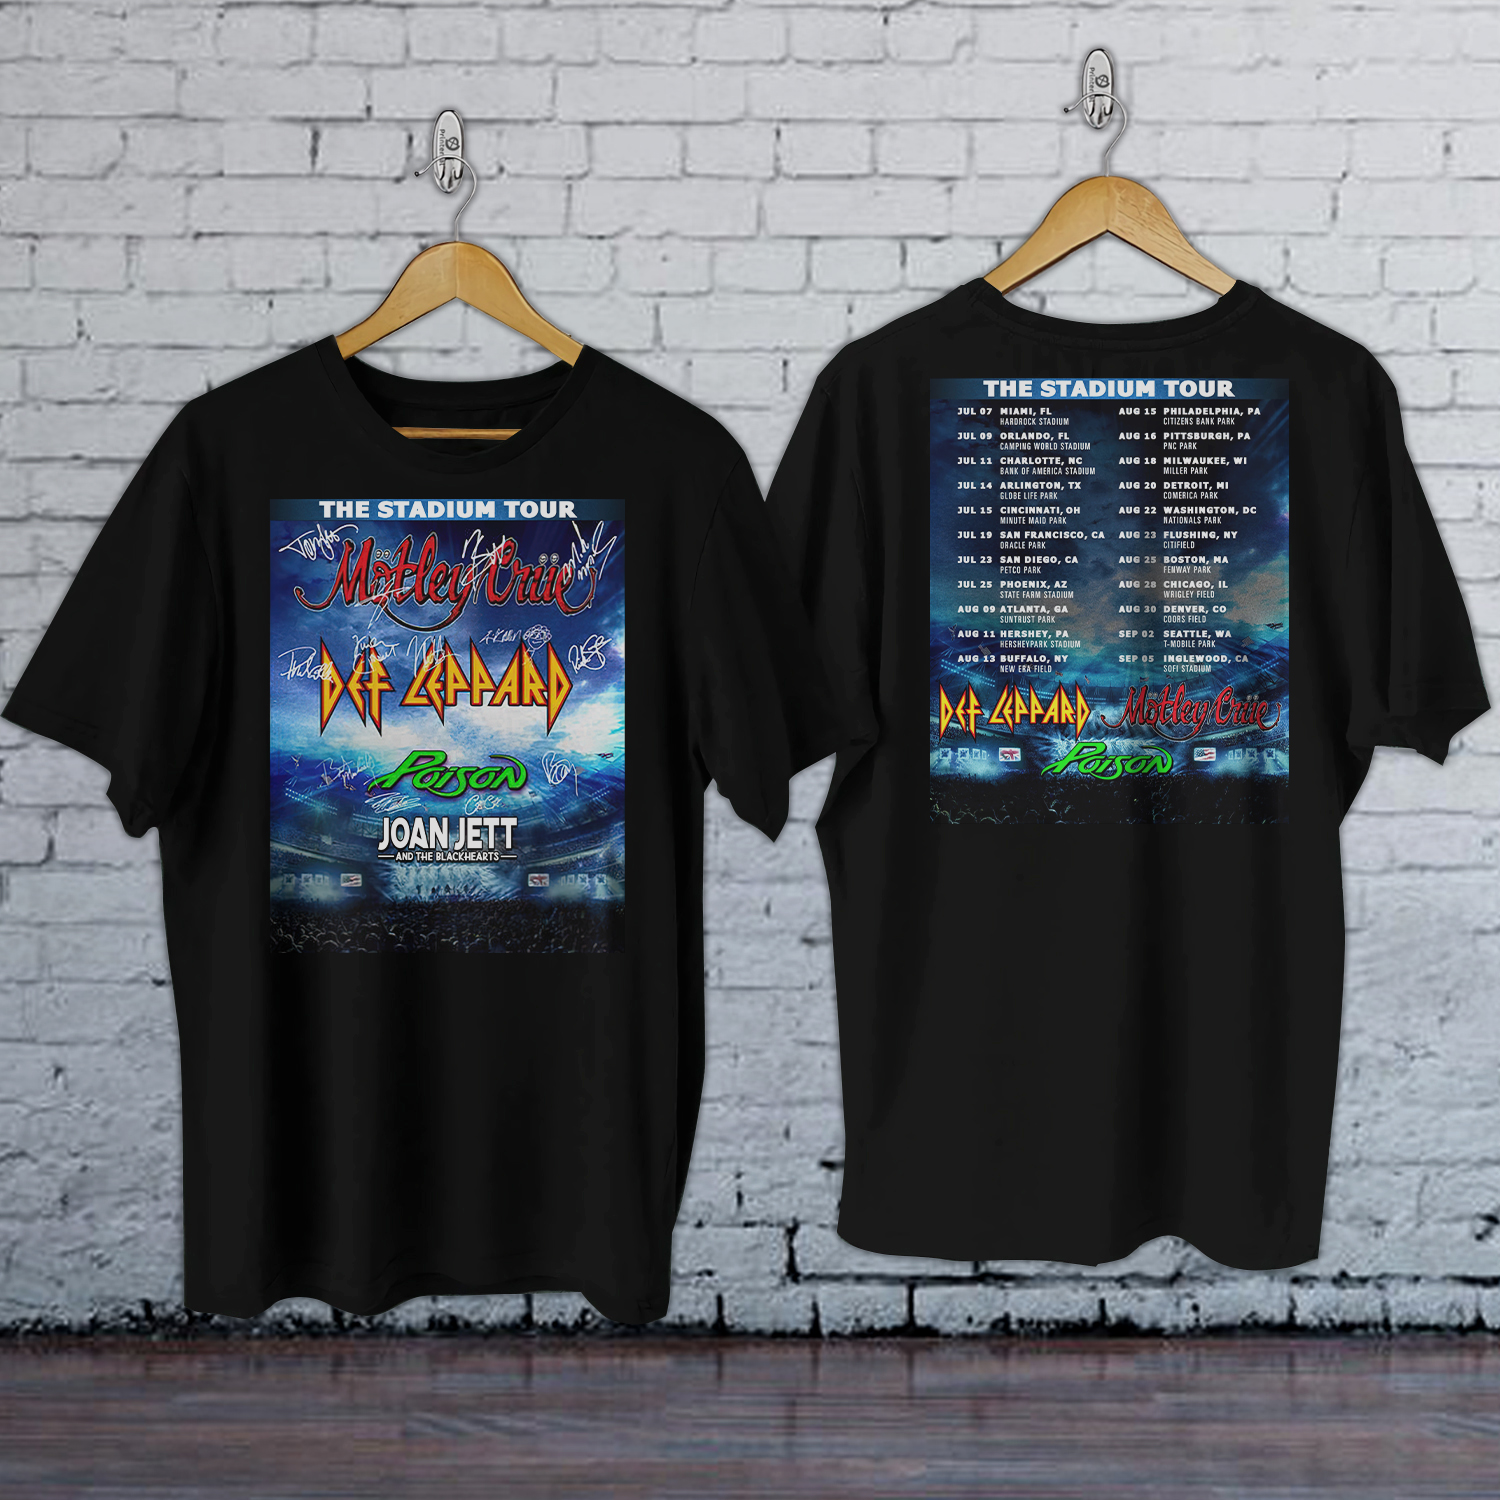 The Stadium Tour 2021Def Leppard Motley Crue Poison Joan Jett & the Blackhearts T Shirt